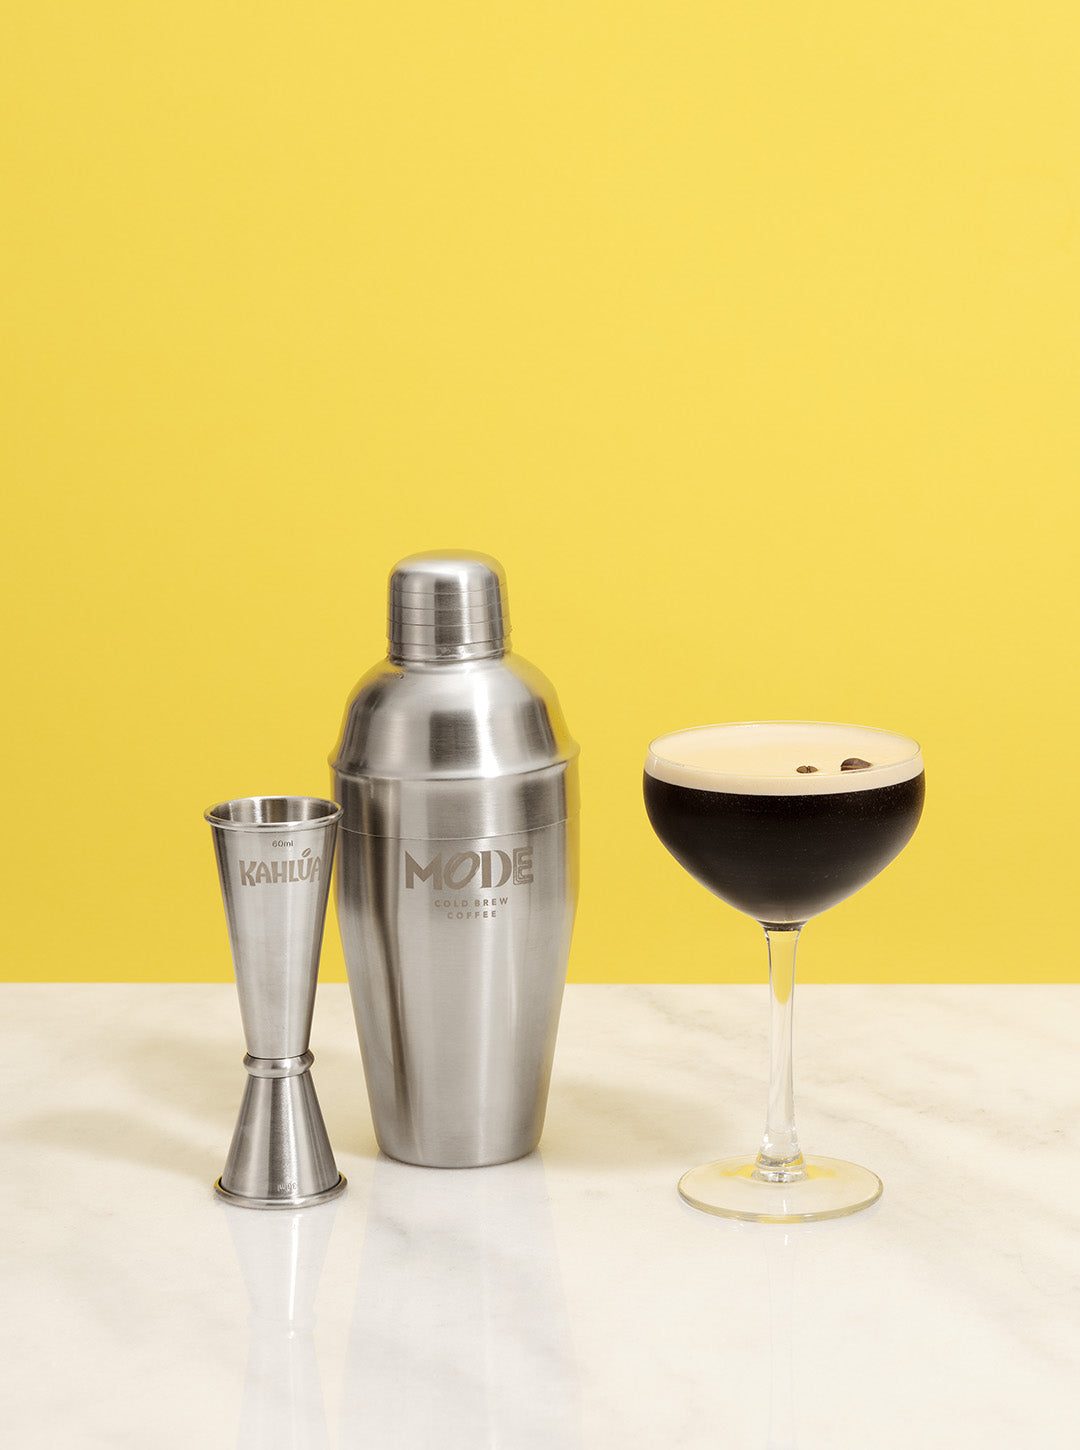 Espresso Martini kit